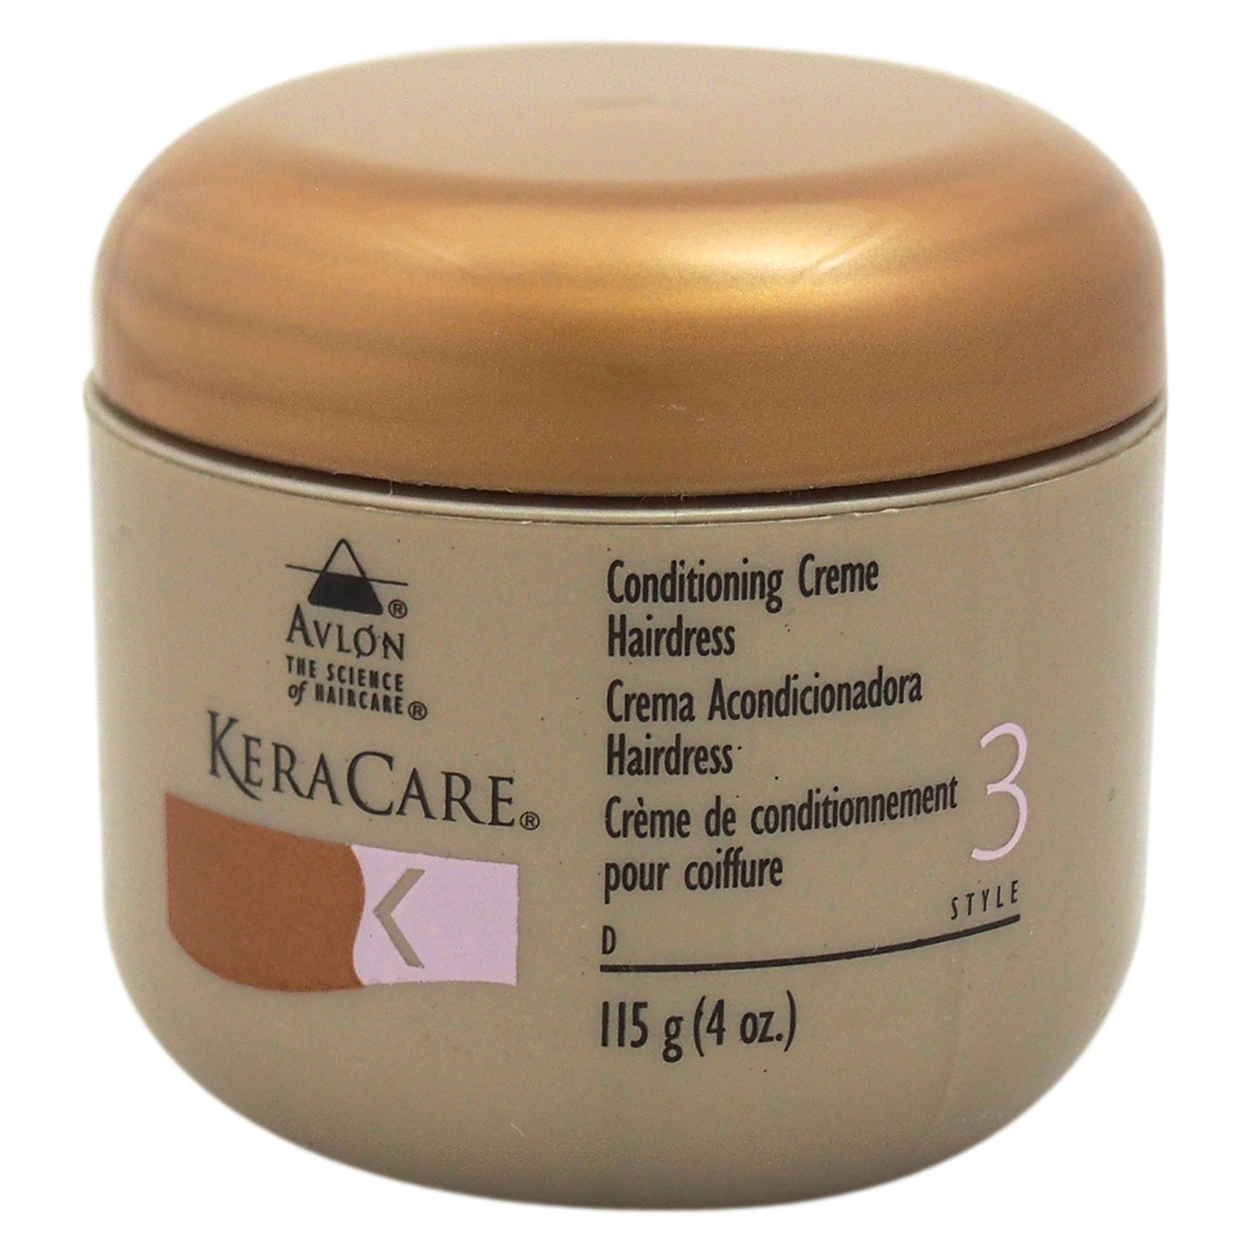 Avlon KeraCare Conditioning Creme Hairdress Cream 4 Oz